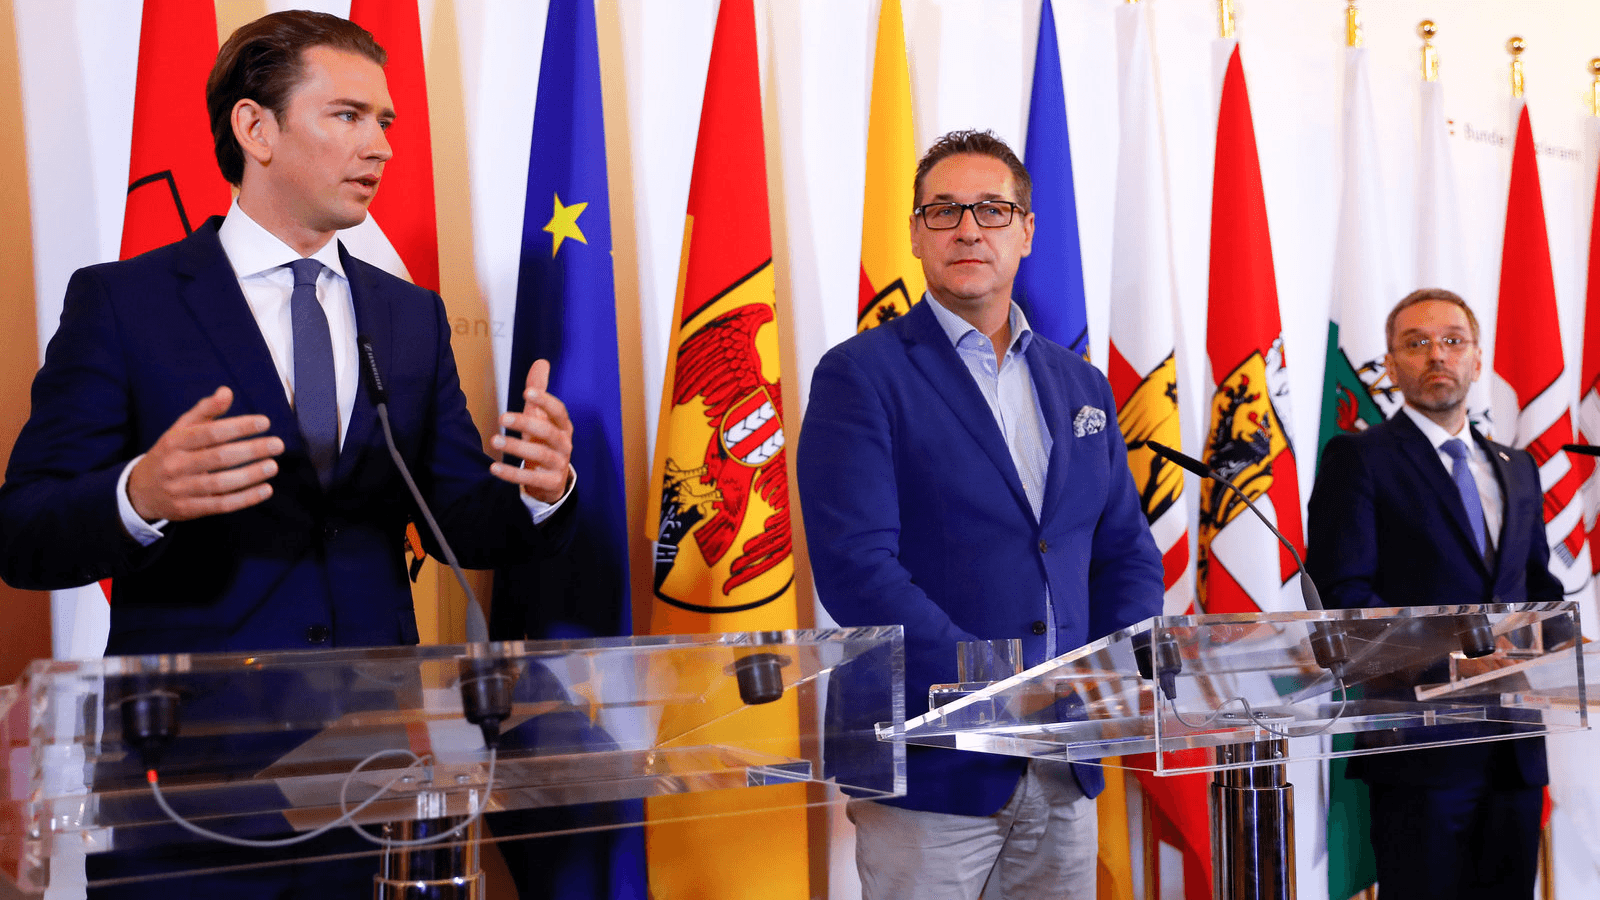 Austrian Chancellor Sebastian Kurz, Vice Chancellor Heinz-Christian Strache and Interior Minister Herbert Kickl attend a news conference in Vienna, Austria, June 8, 2018.